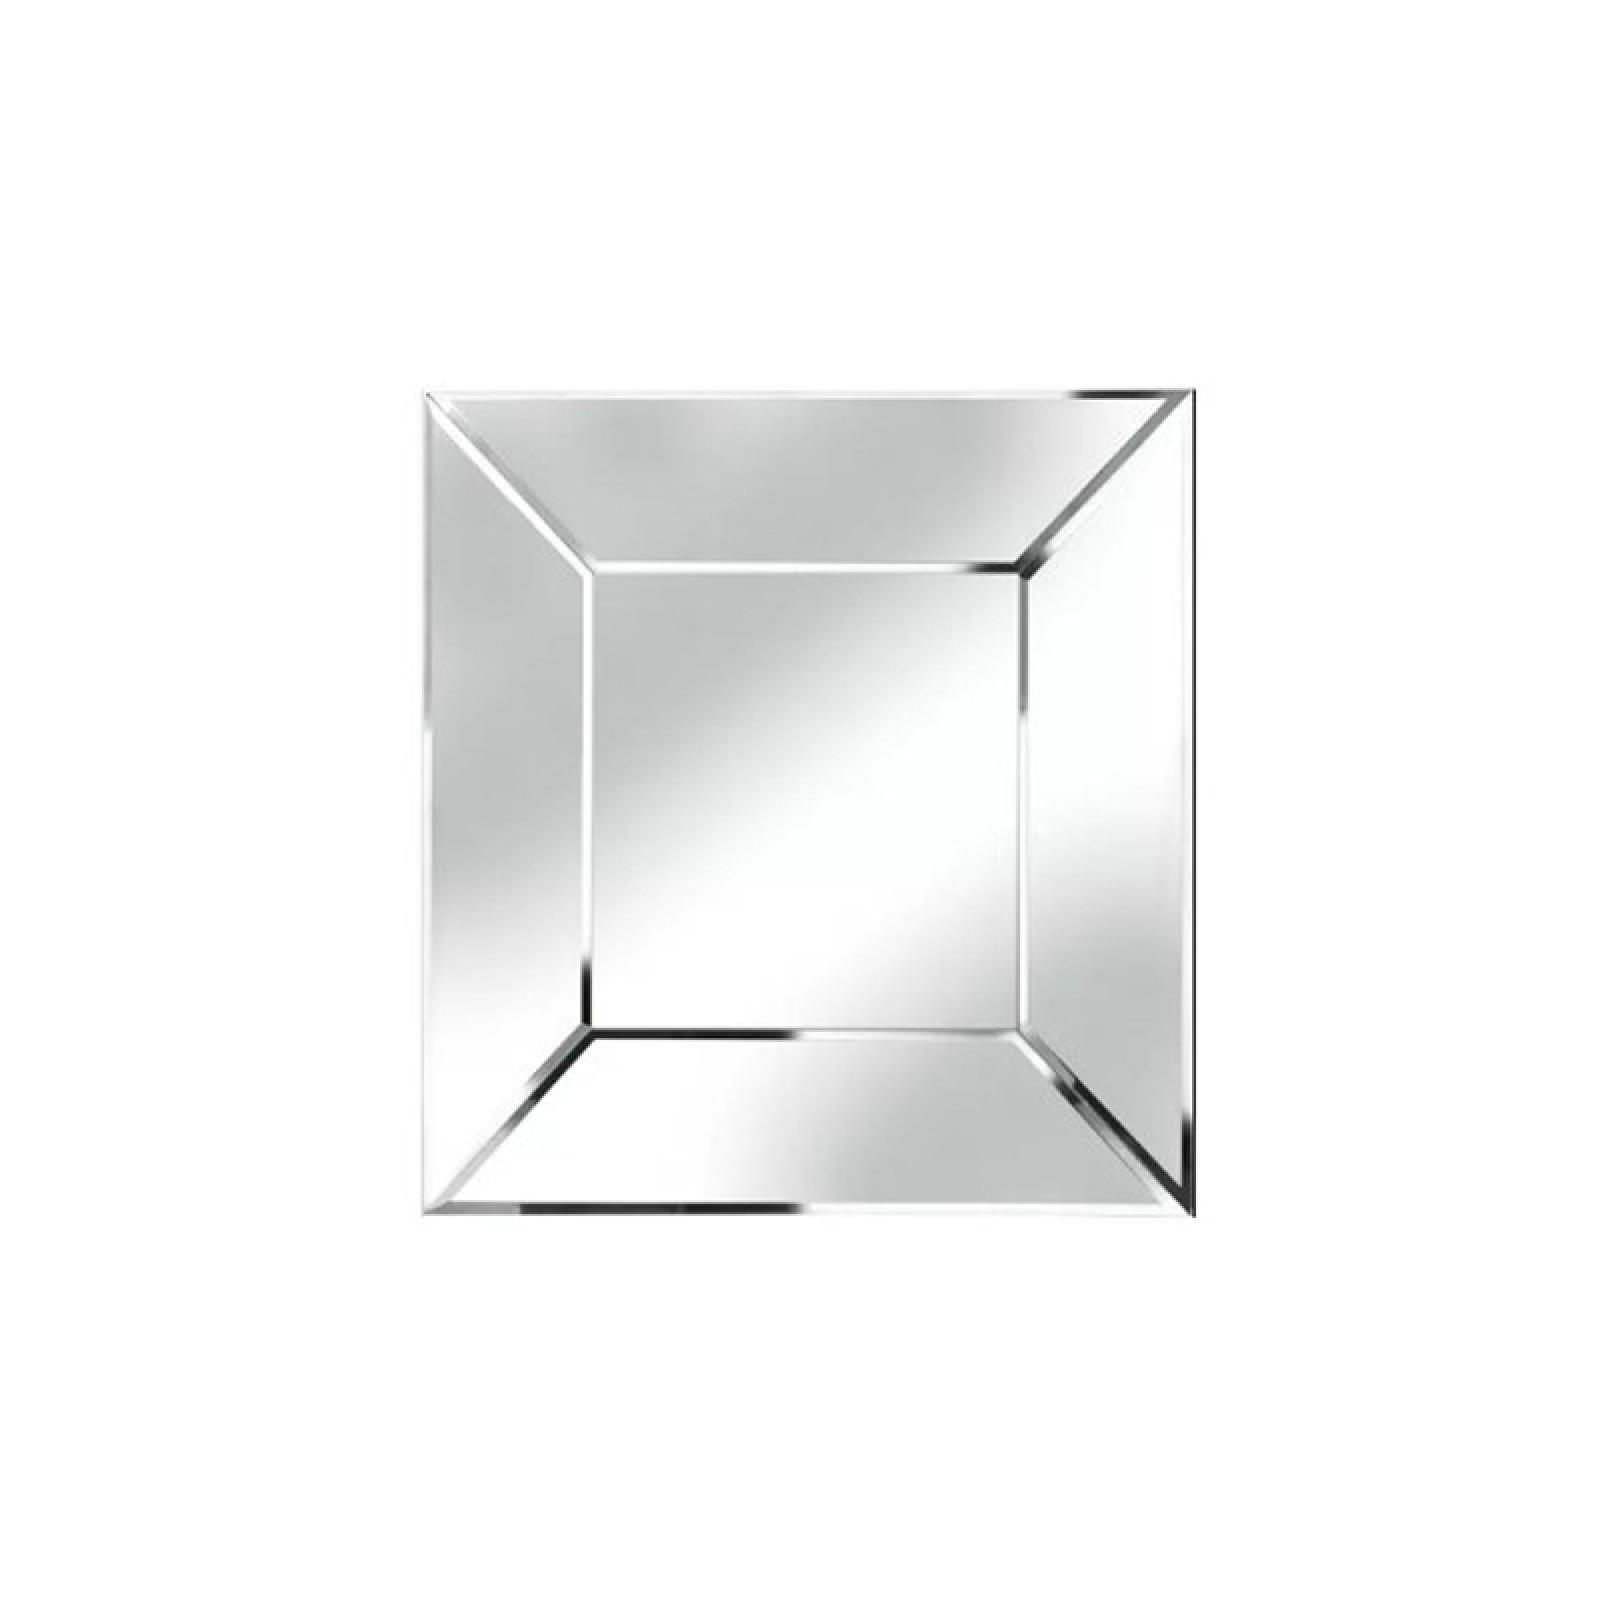 Gable Square mirror